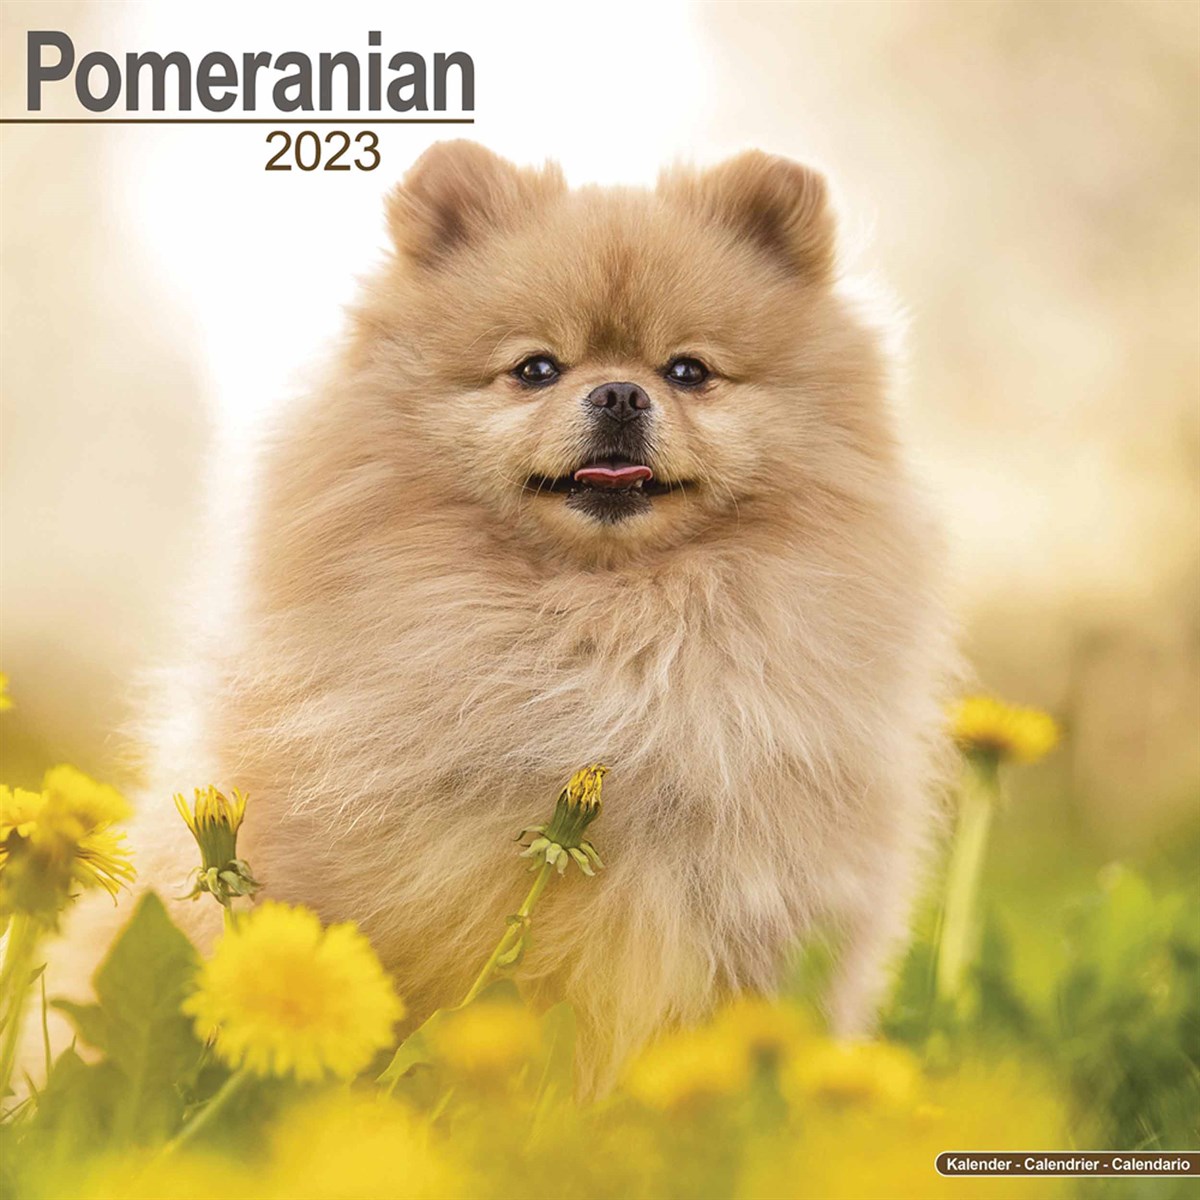 Pomeranian 2023 Calendars